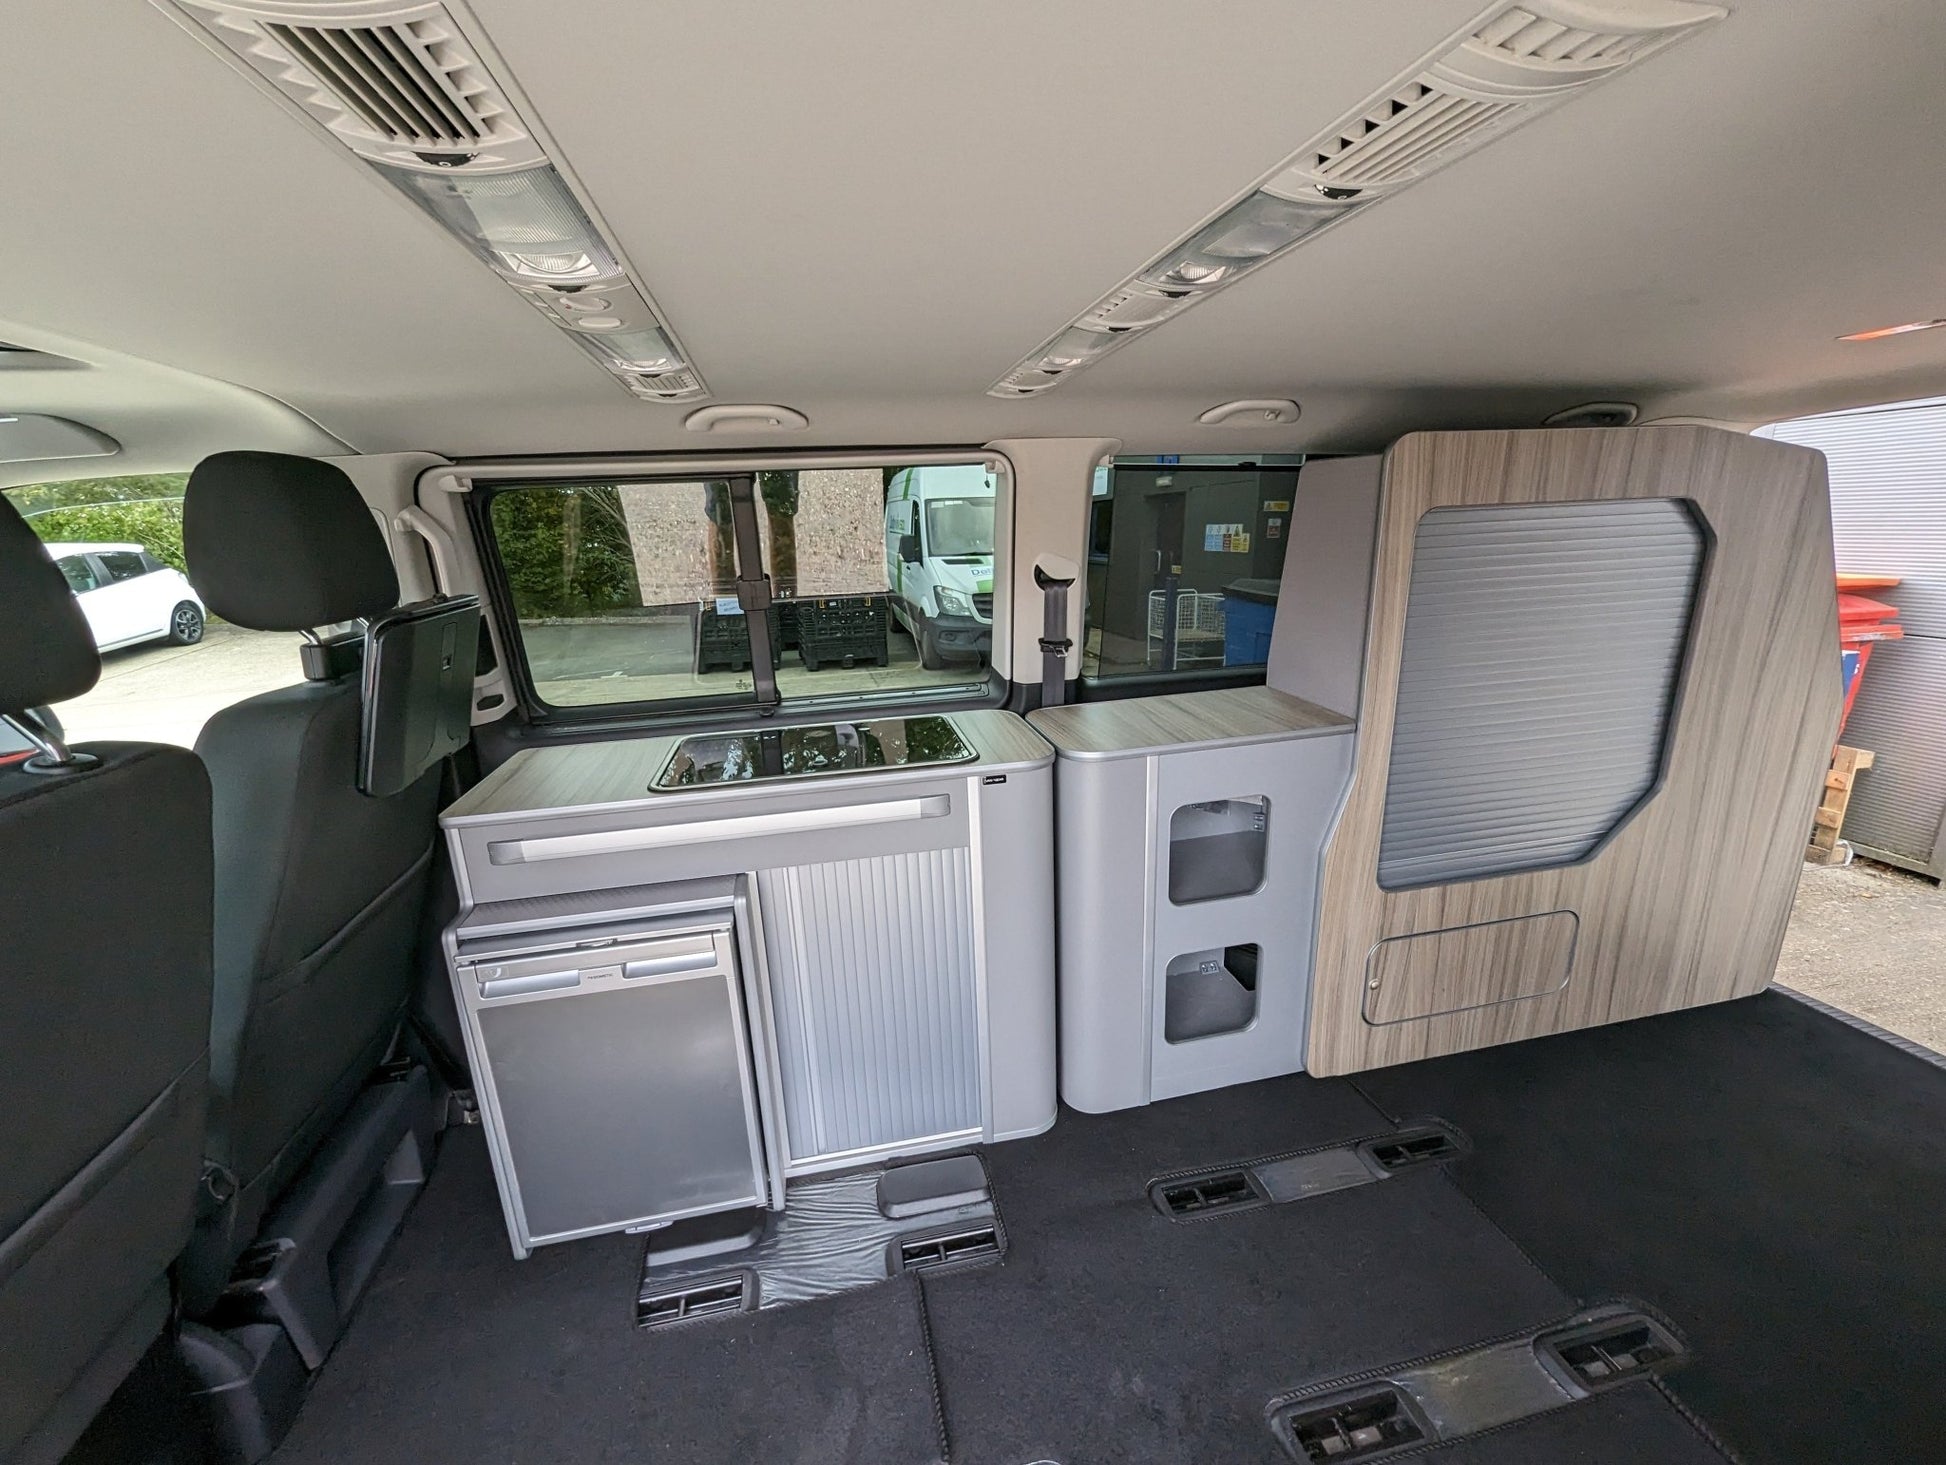 Rear-Pod (slim factory trim version) to make a modular campervan system - Vangear UK